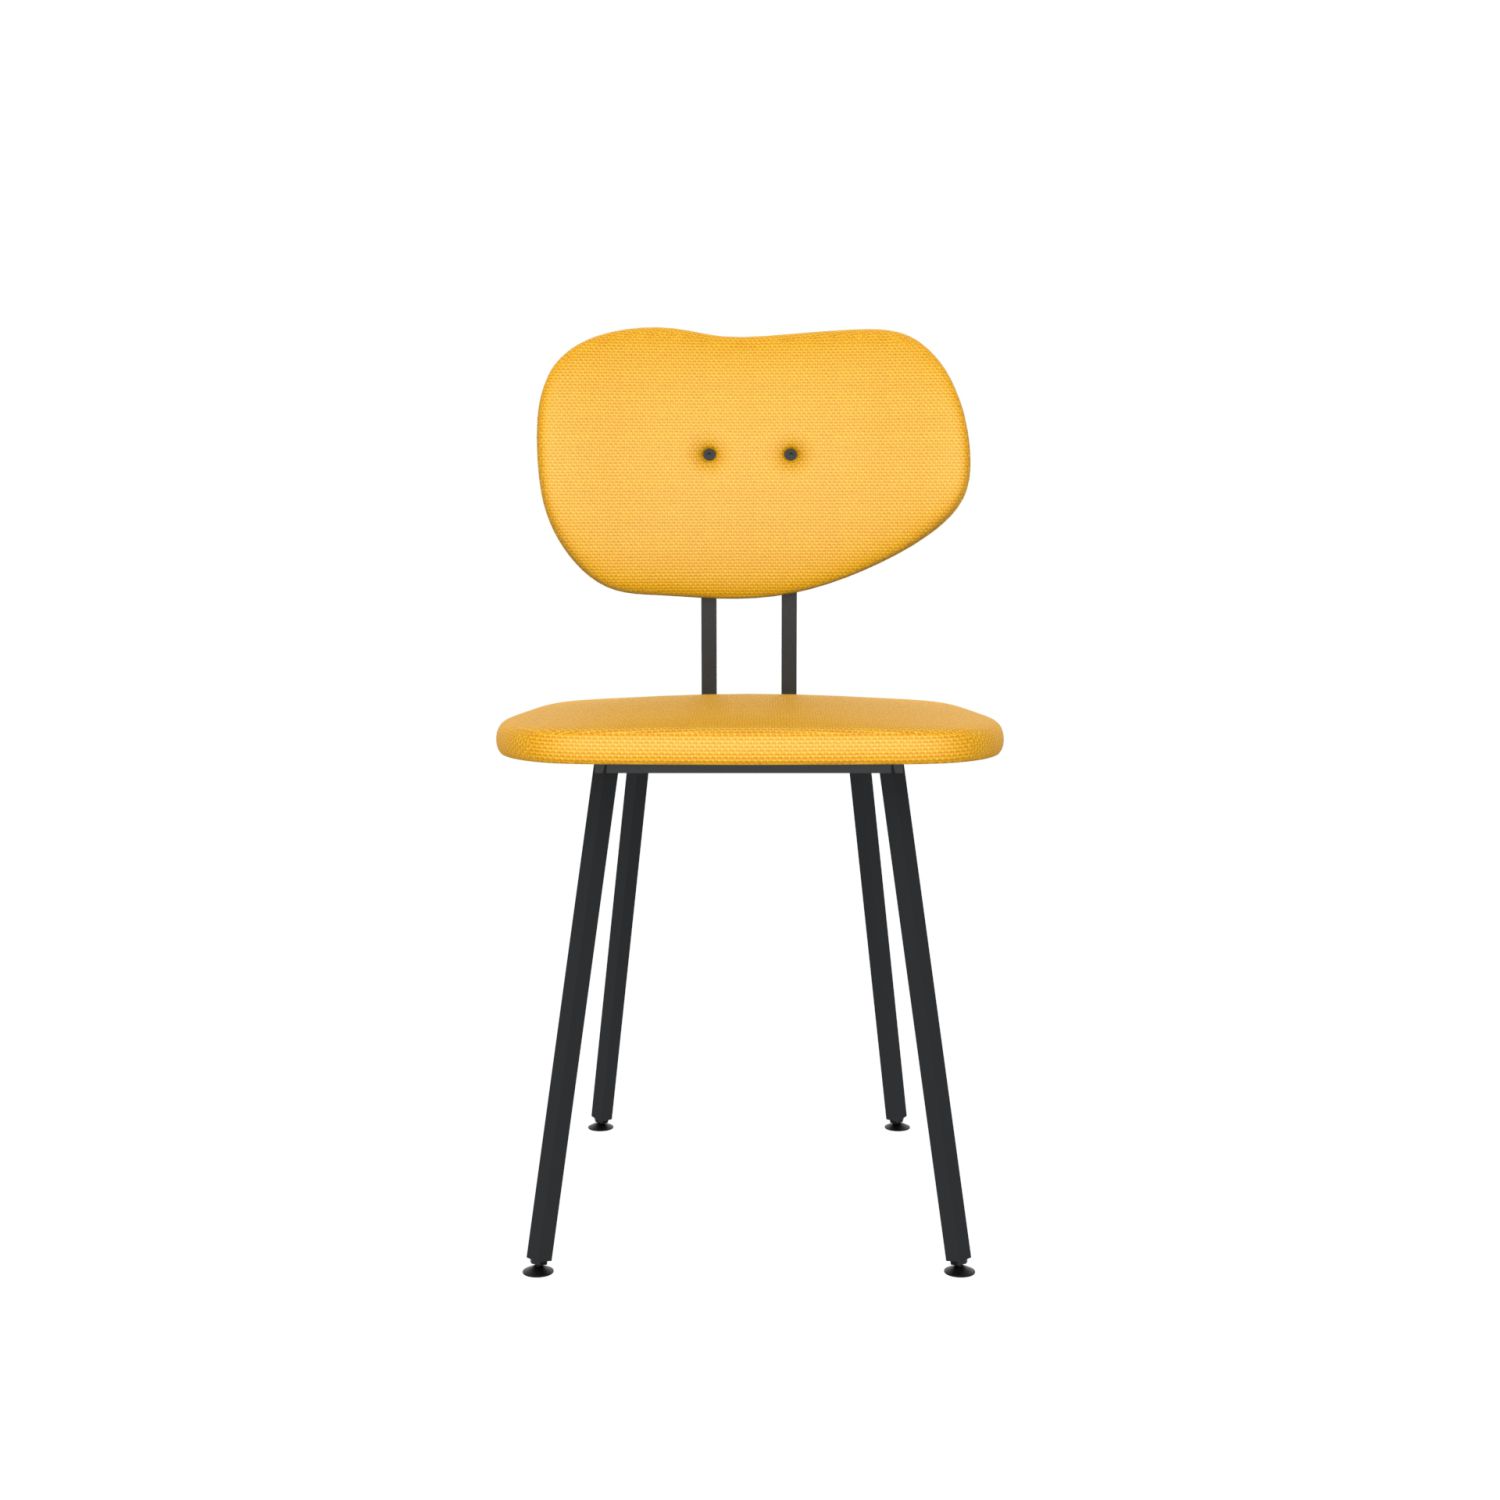 lensvelt maarten baas chair 101 not stackable without armrests backrest b lemon yellow 051 black ral9005 hard leg ends